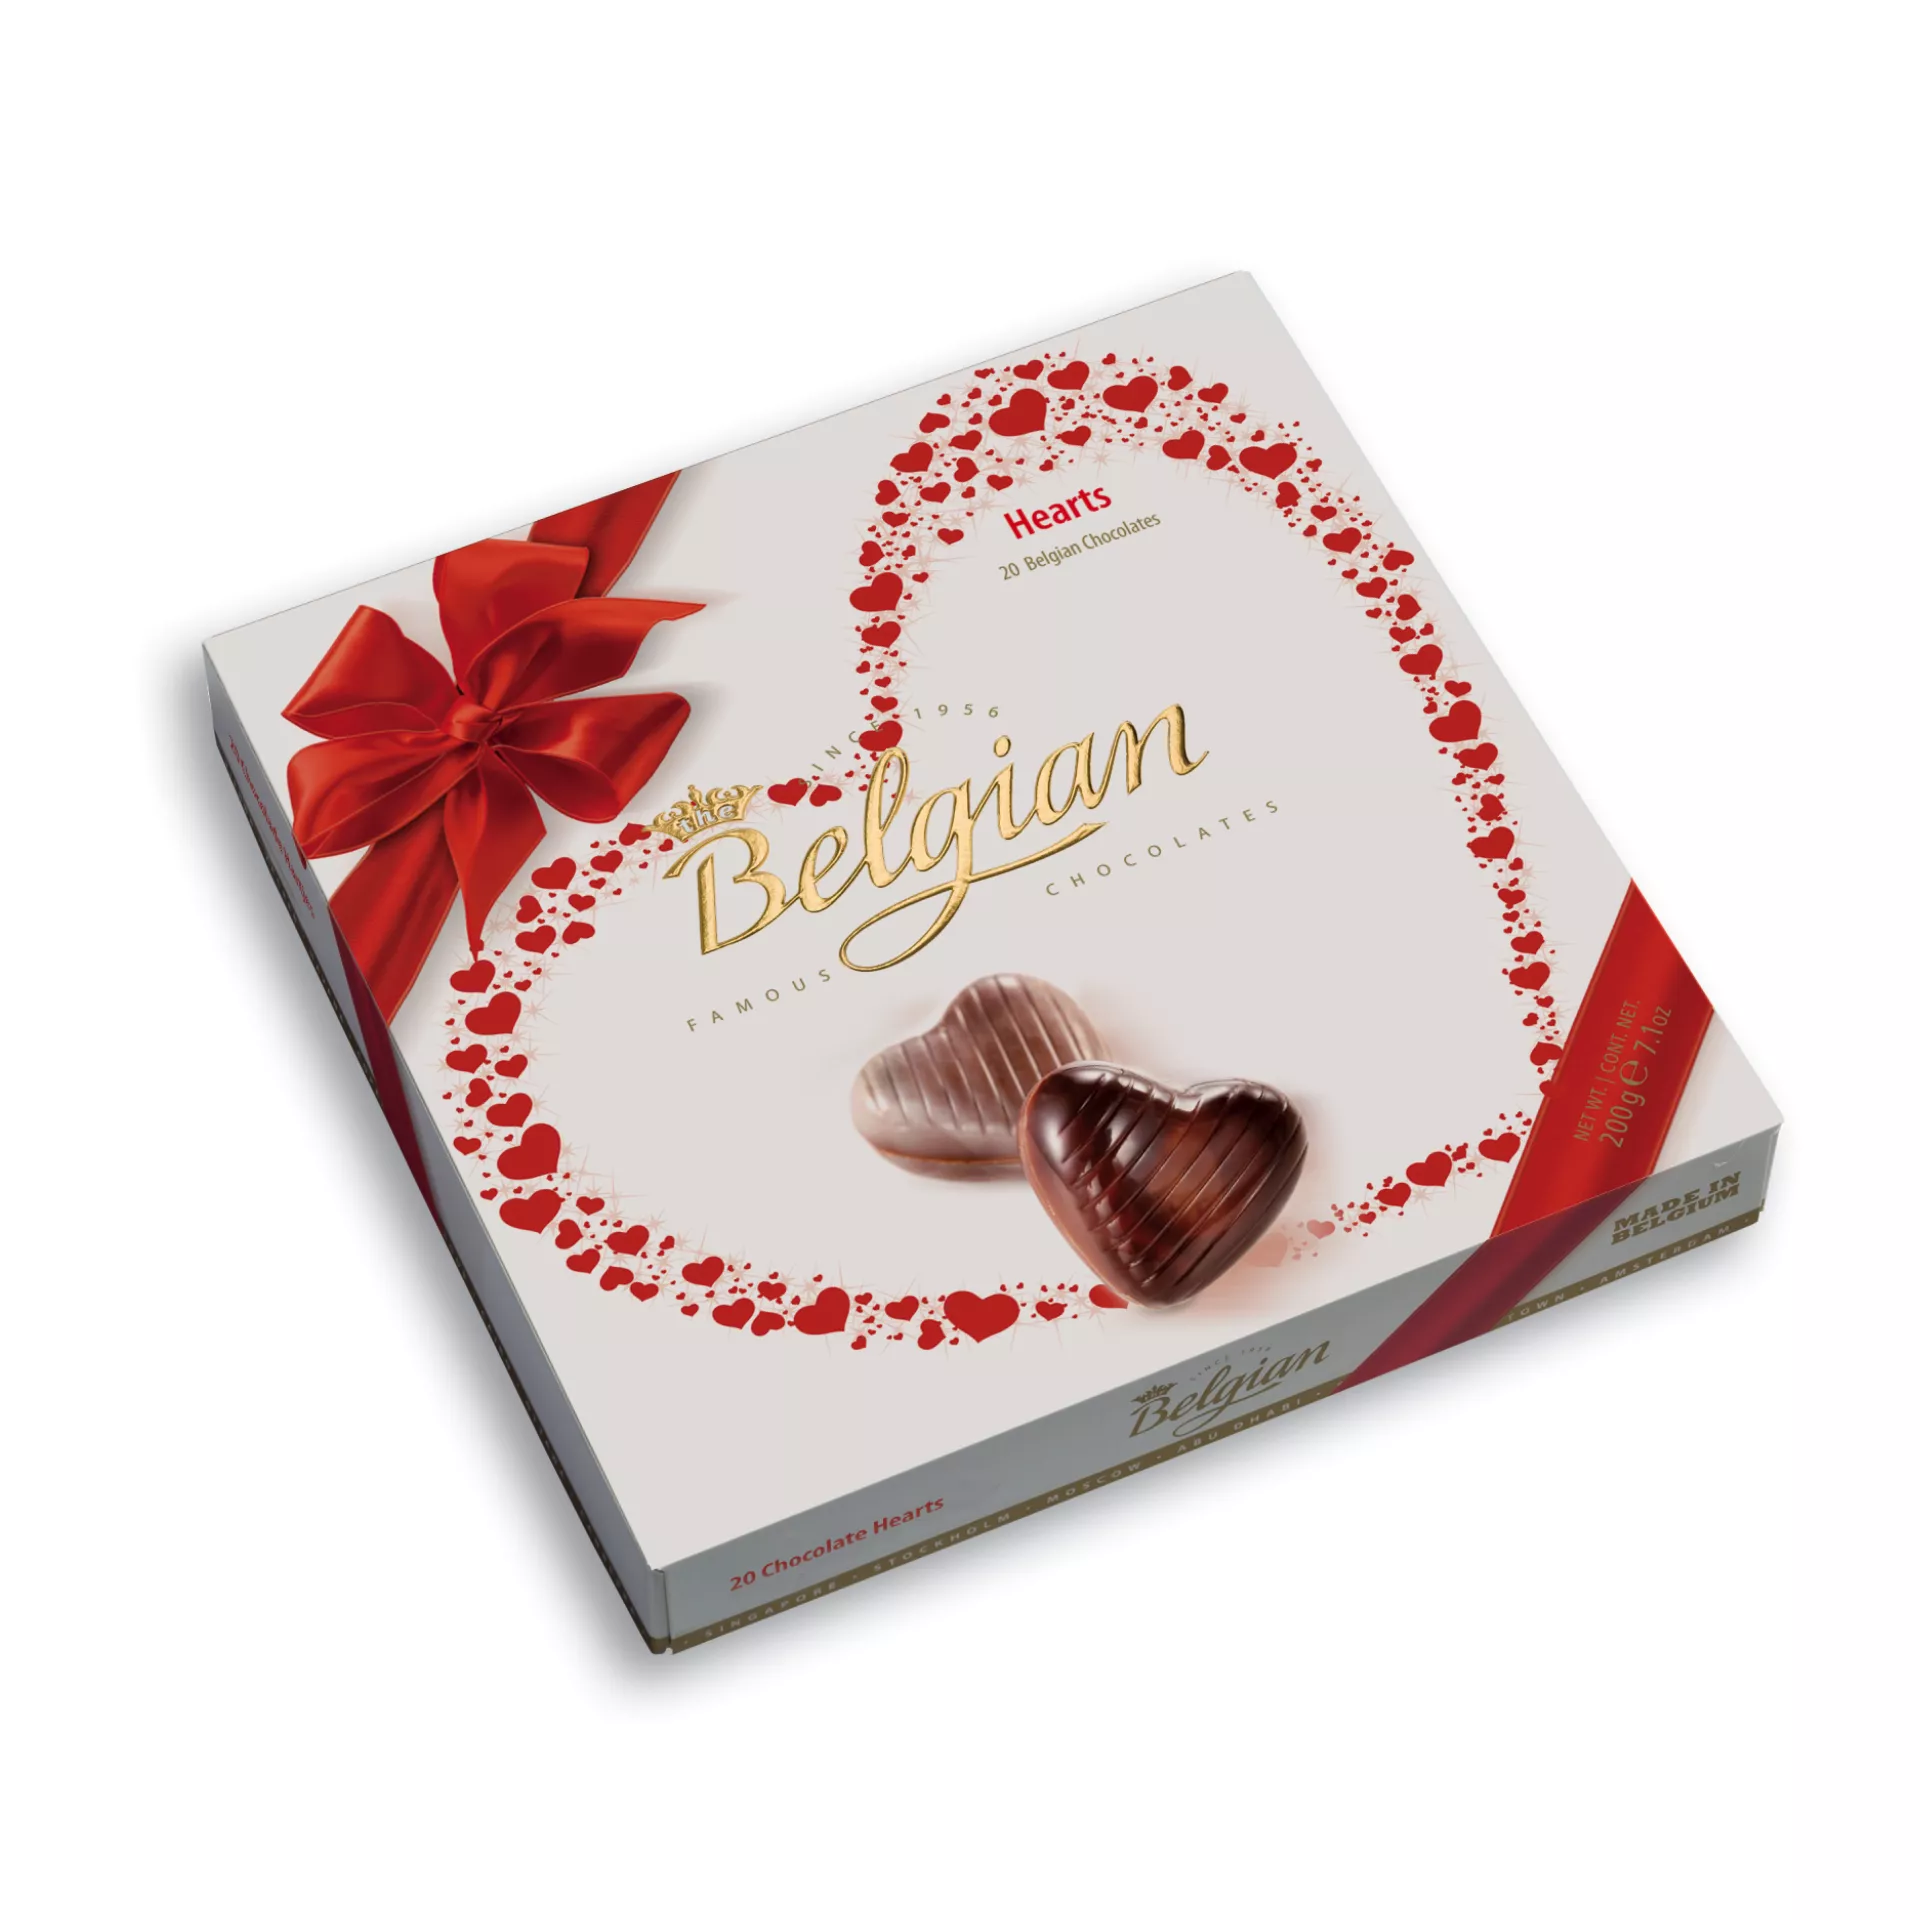 The Belgian box of chocolate hearts